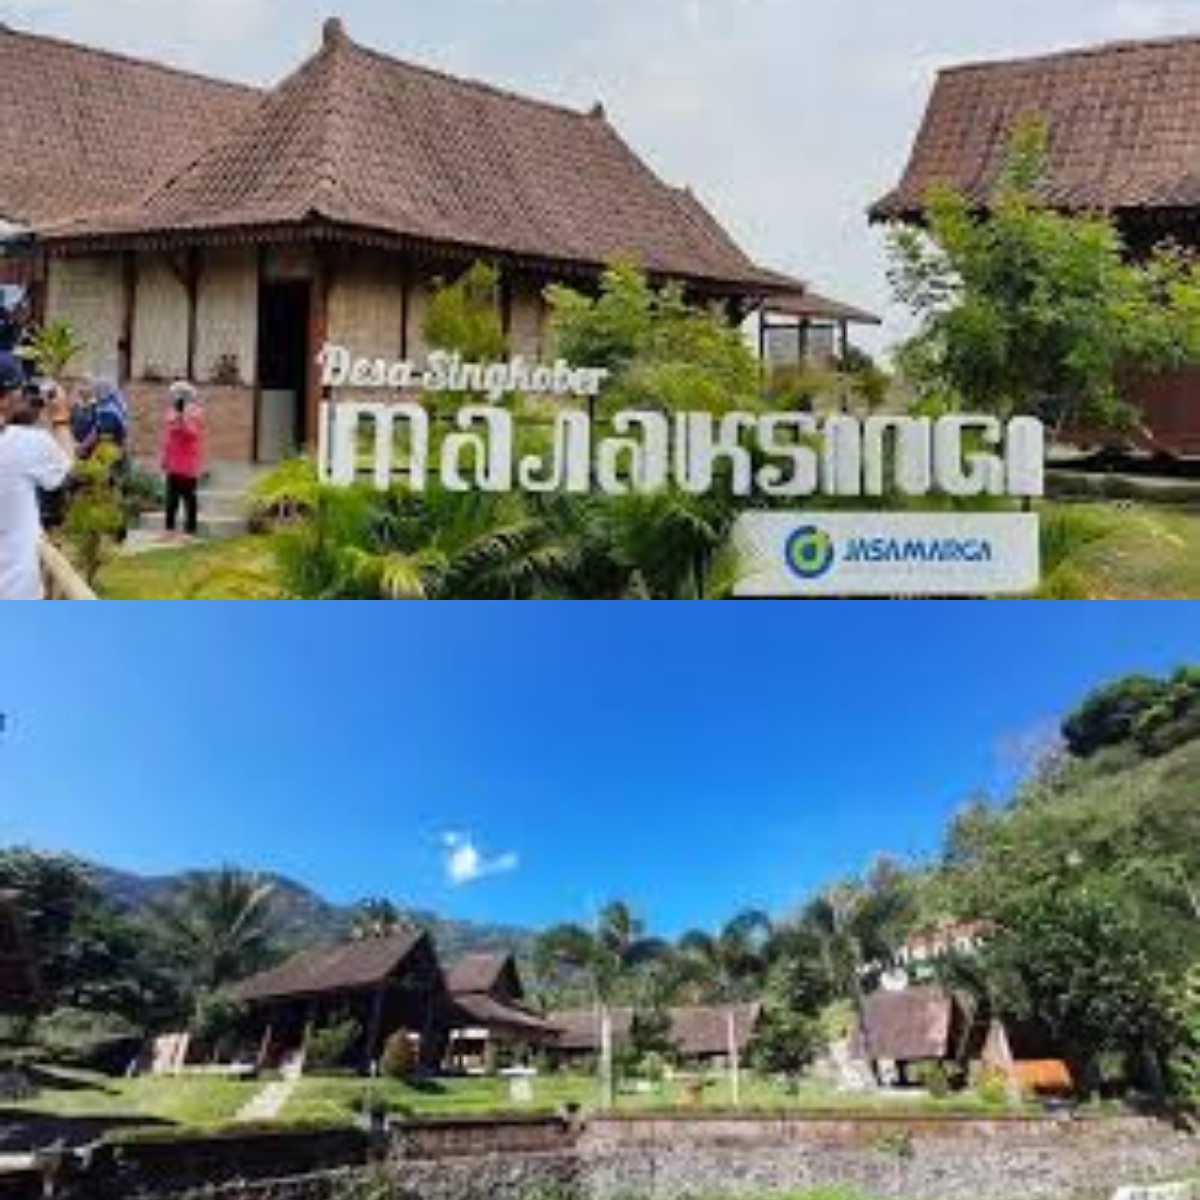 Mengulik 12 Keindahan Desa Wisata Sekitar Candi Borobudur 